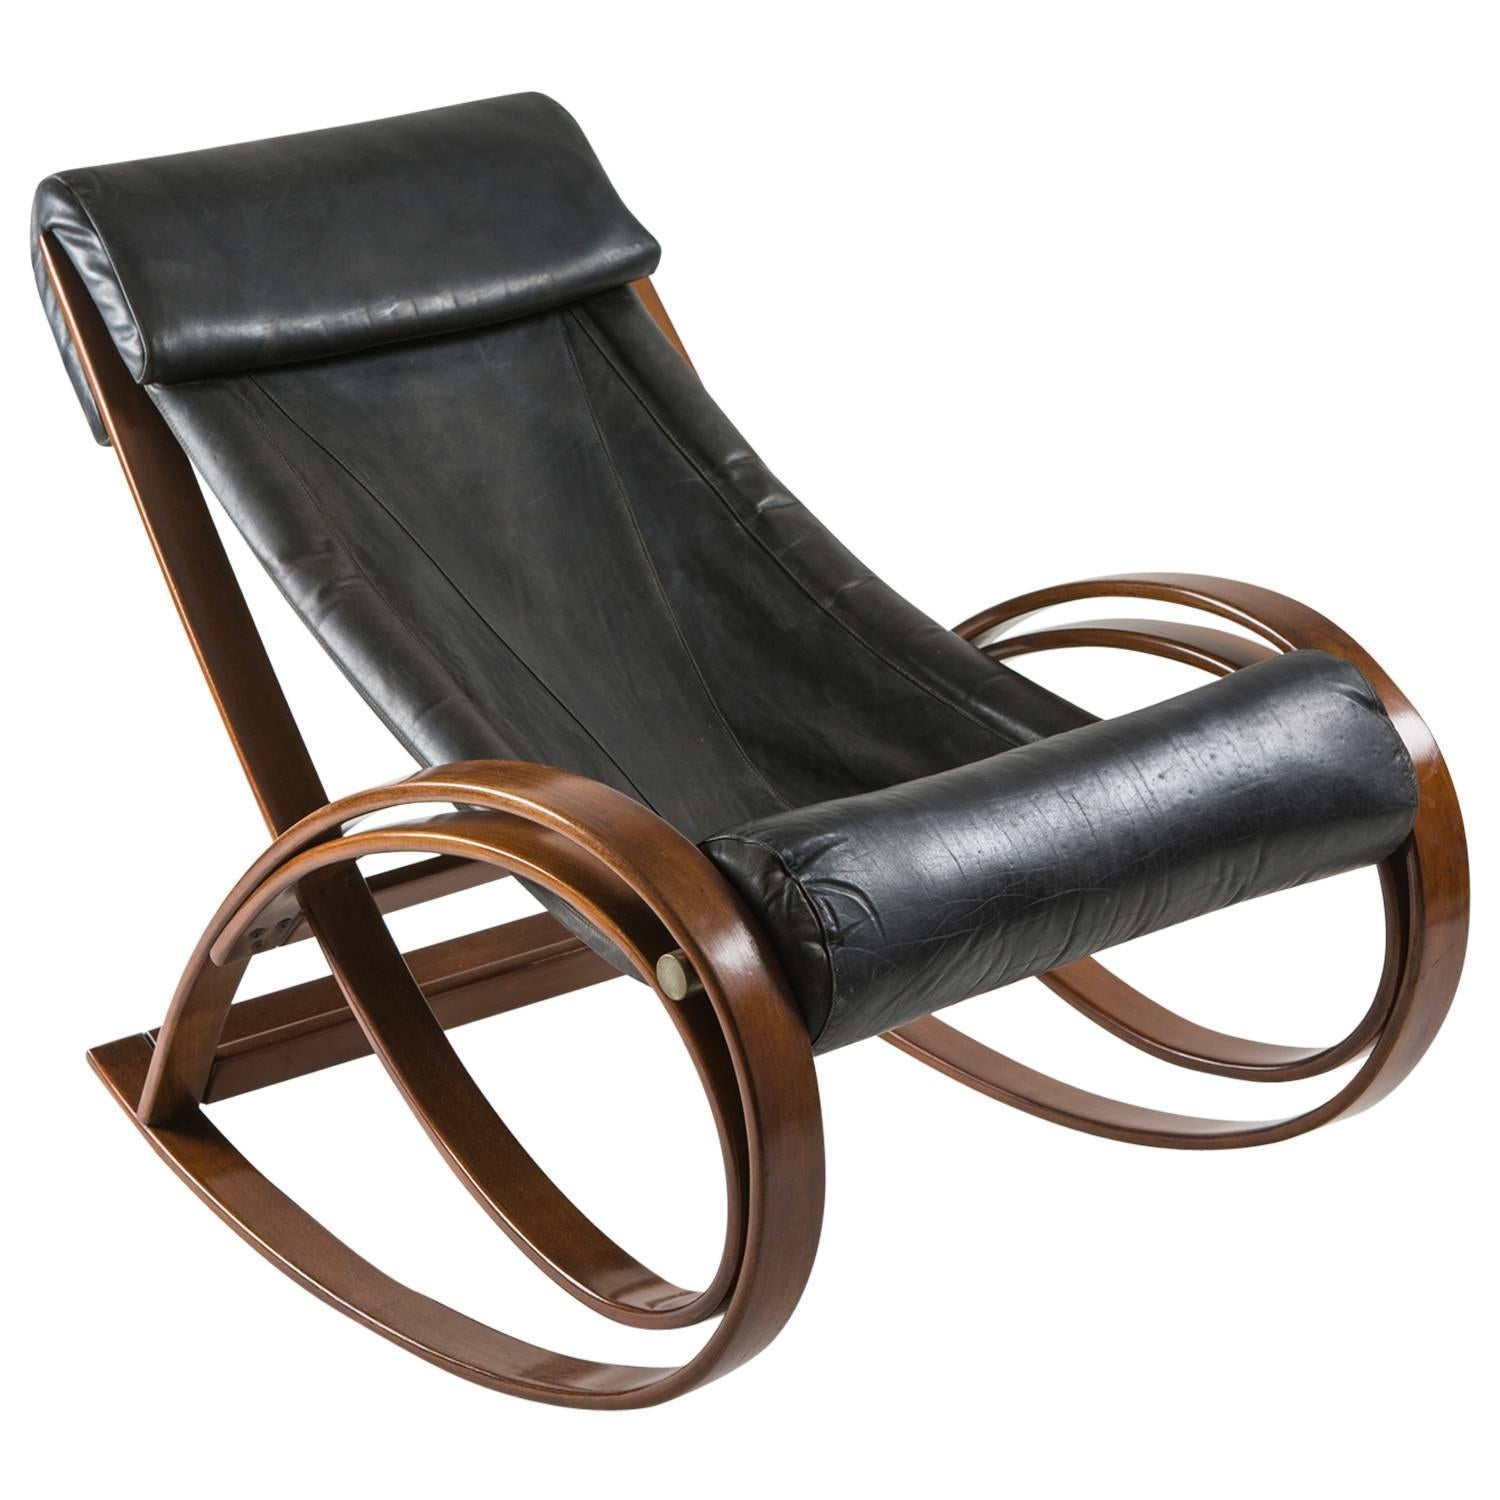 "Sgarsul" Rocking Chair by Gae Aulenti for Poltronova